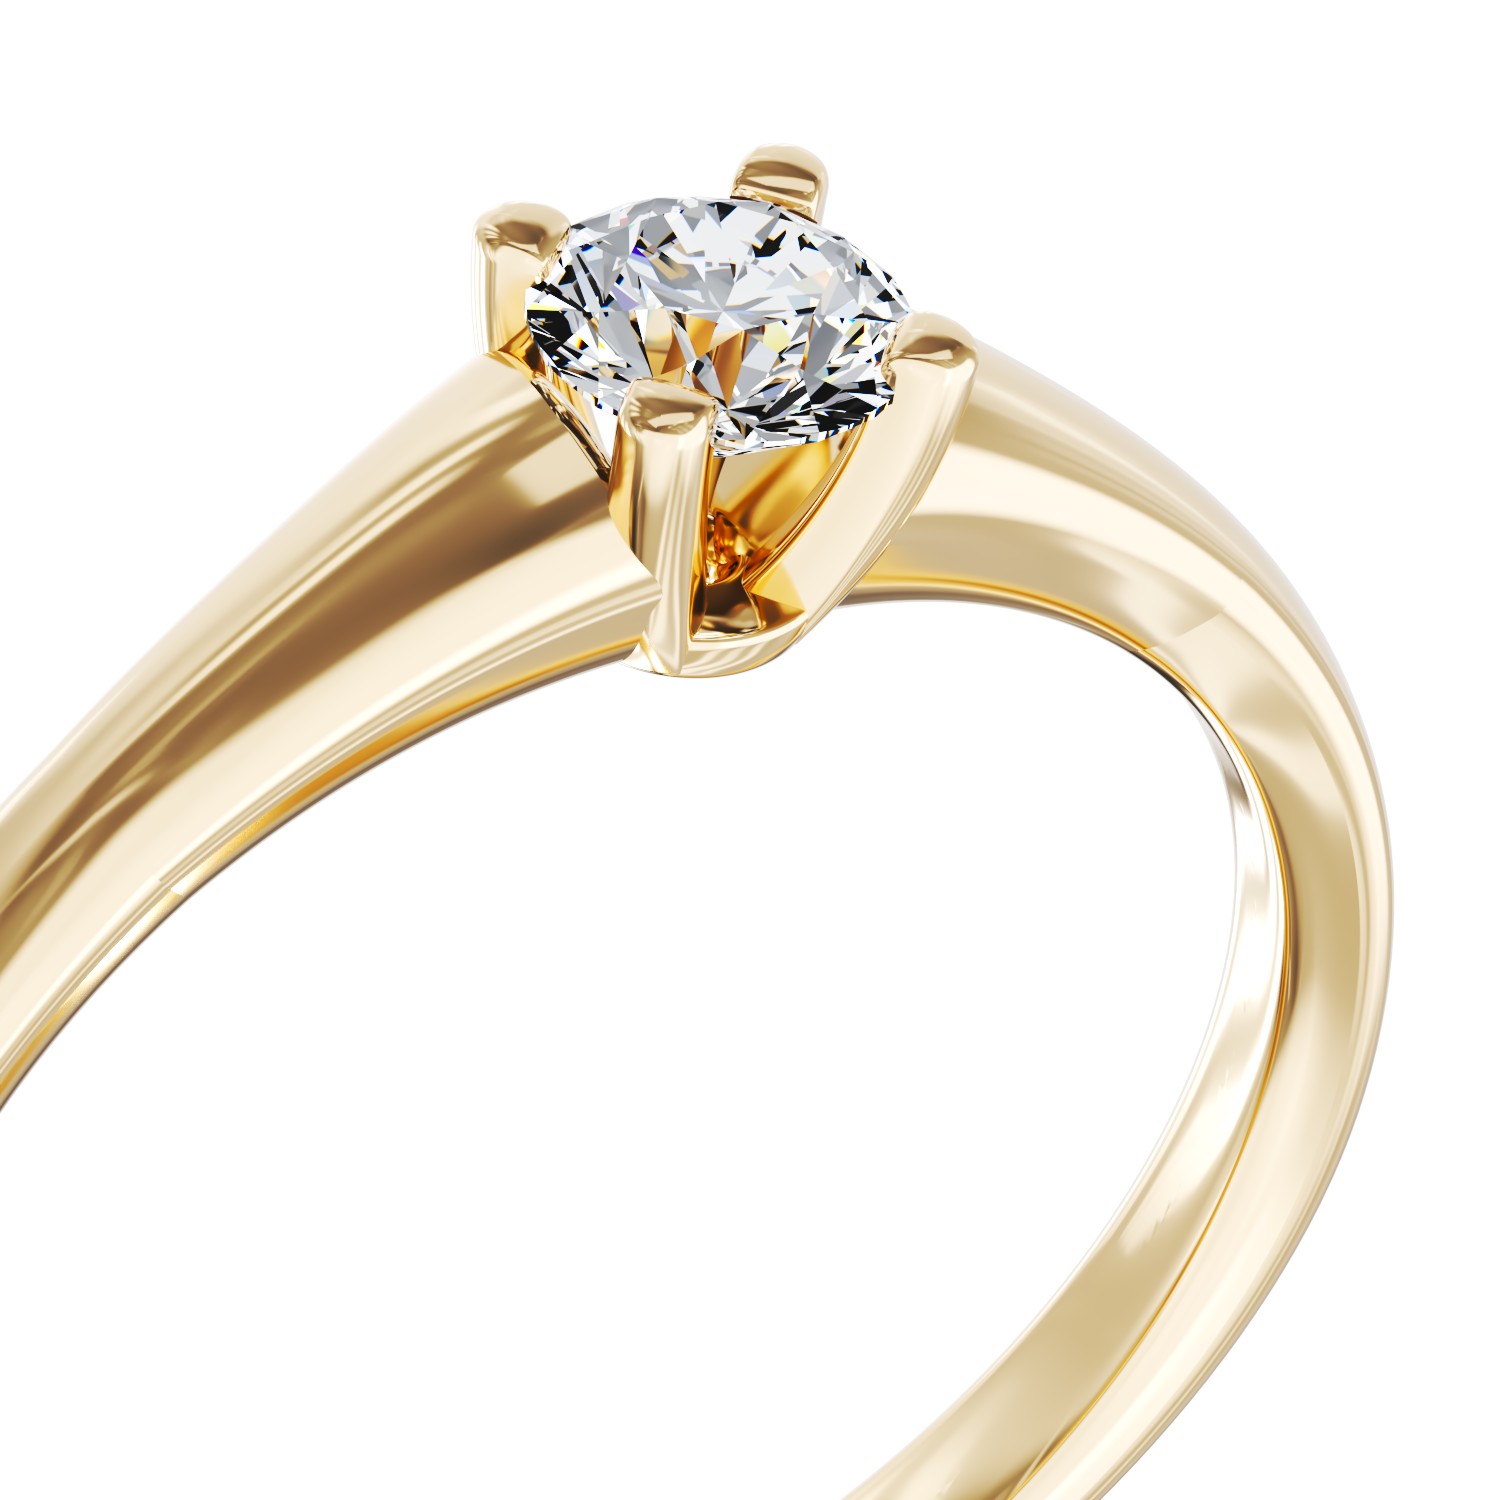 Inel de logodna din aur galben de 18K cu un diamant solitaire de 0.145ct